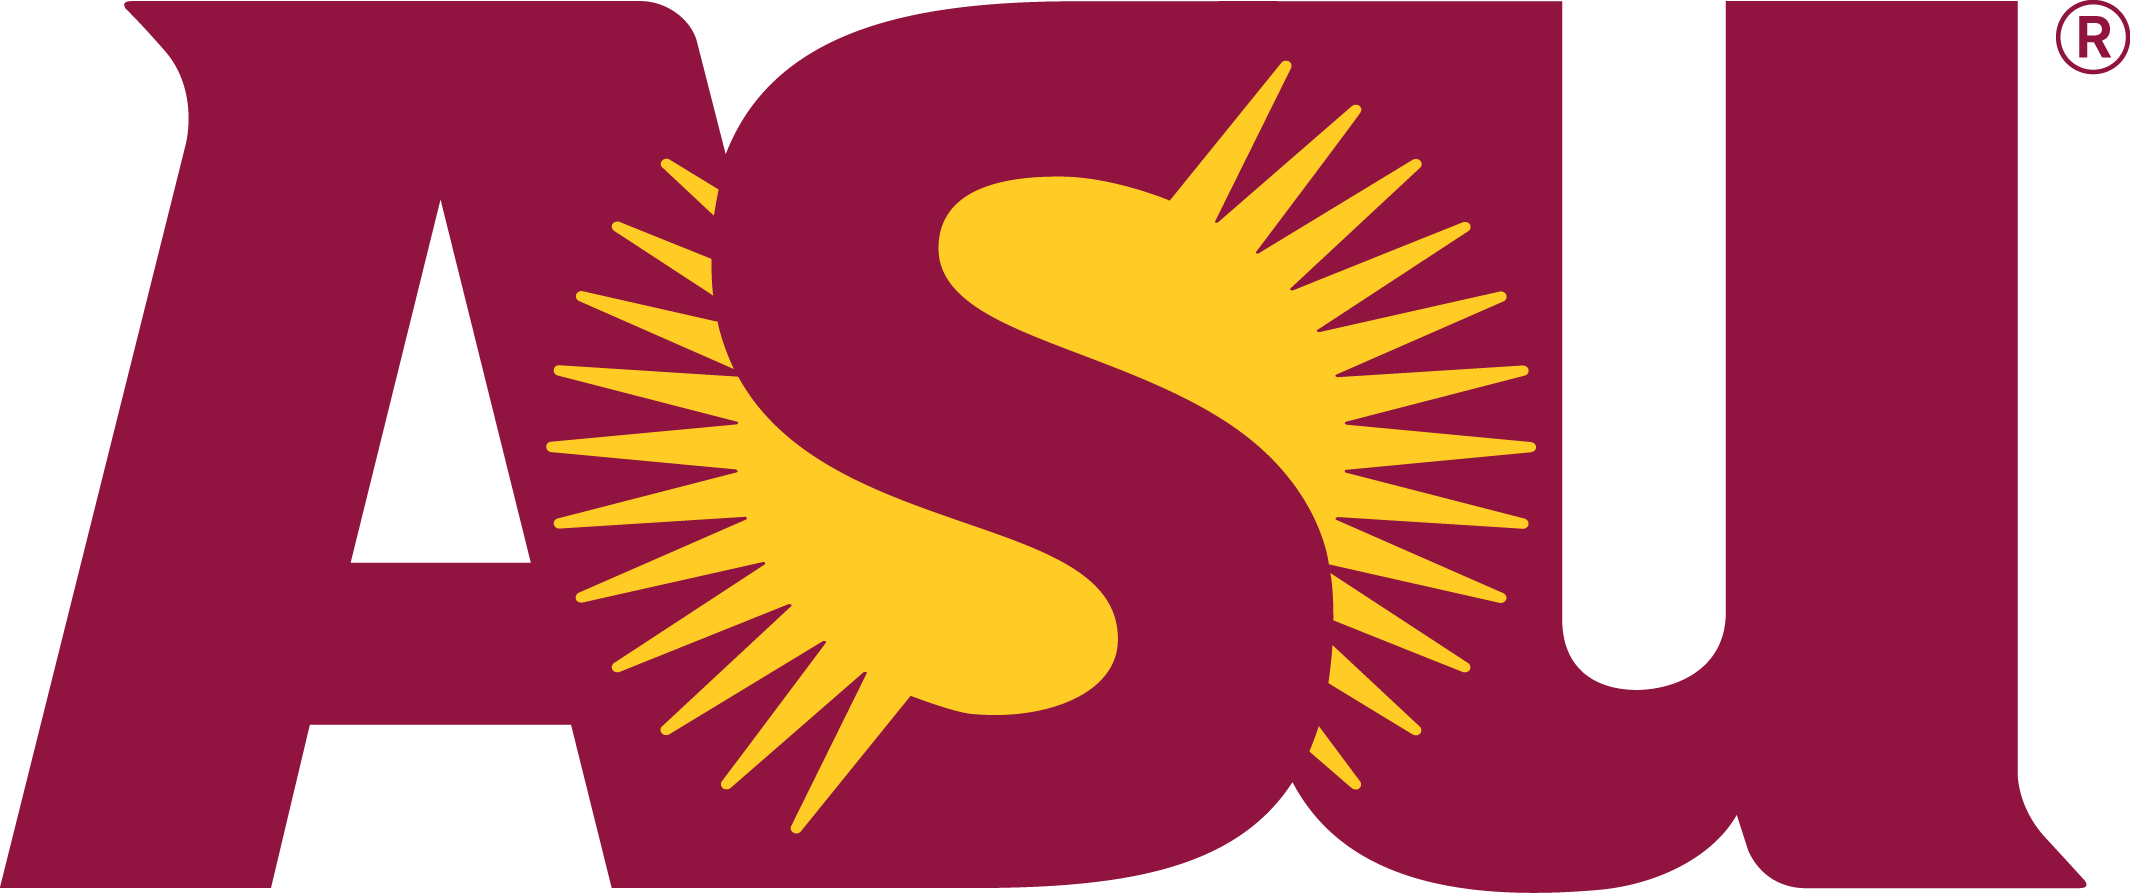 Arizona State University (ASU) Logo PNG Clipart